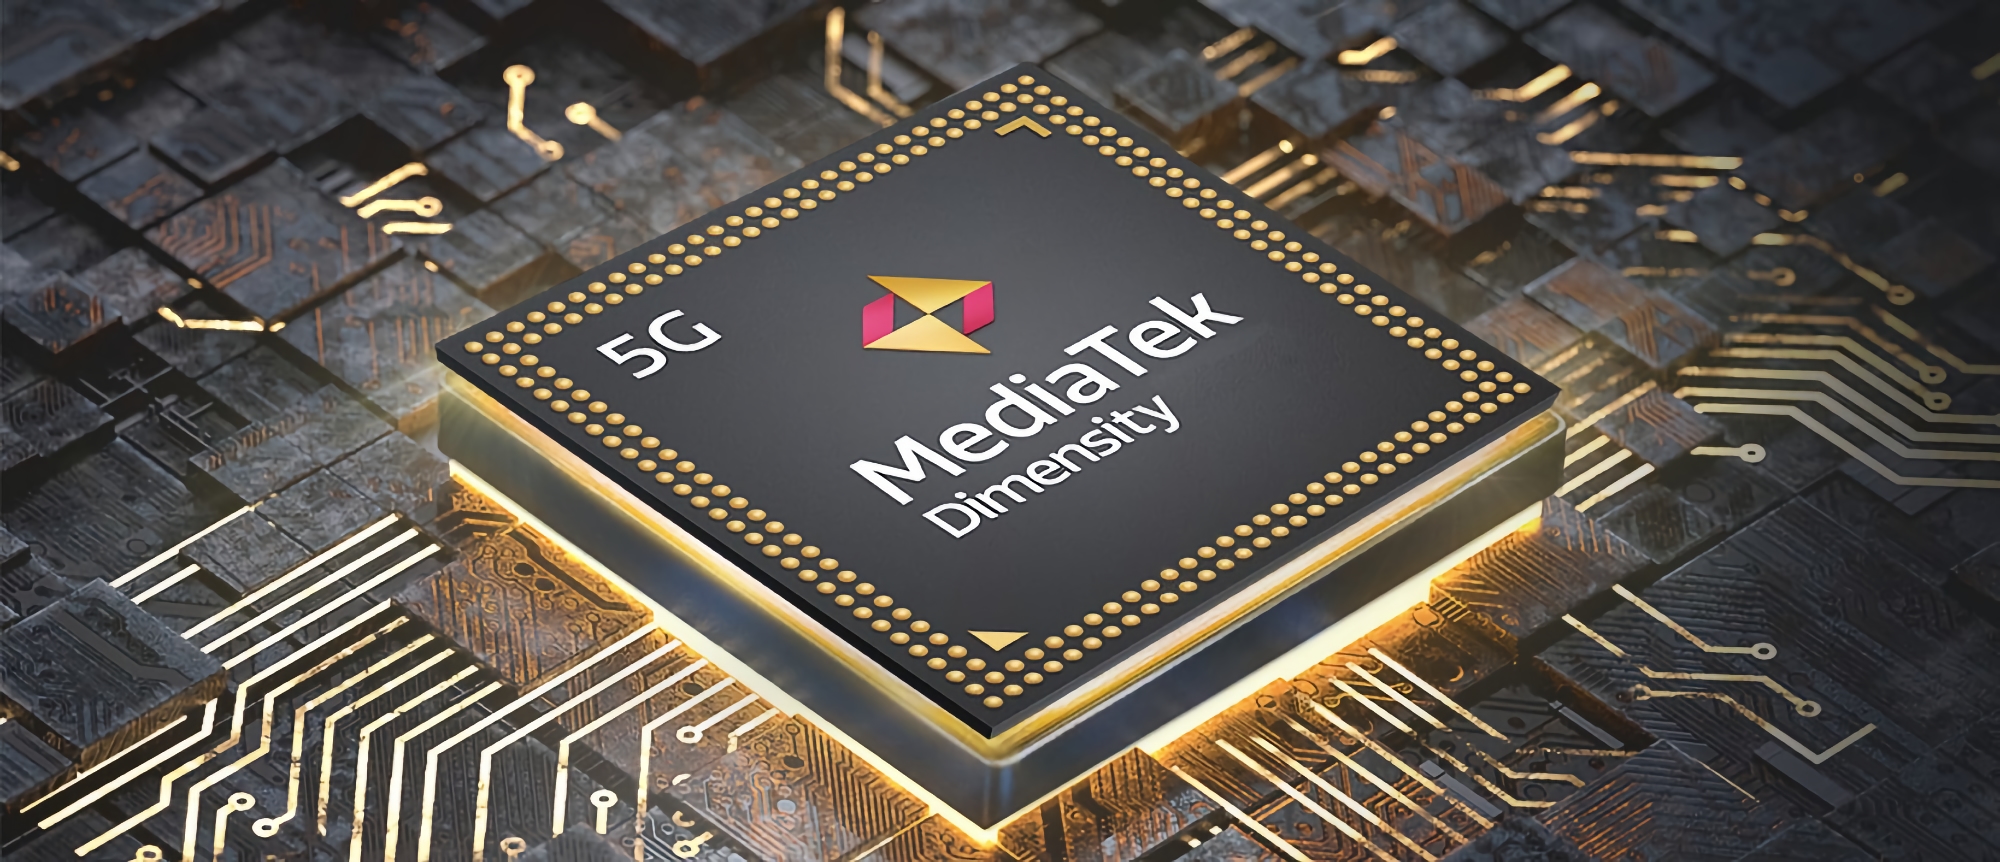 Insider: MediaTek will introduce a 5-nanometer Dimensity 8100 processor in March